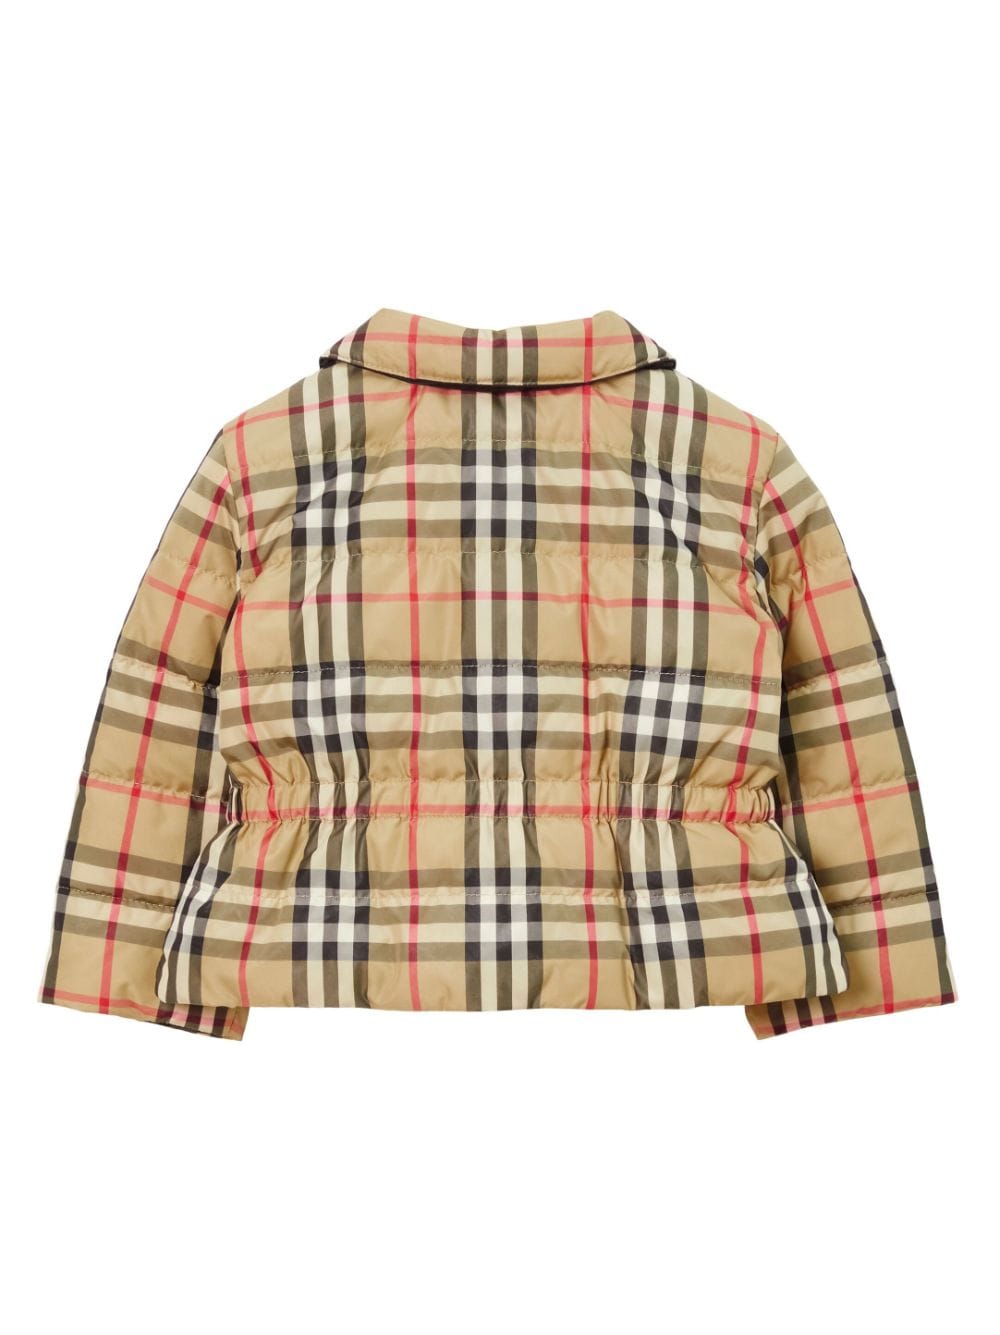 Burberry Kids check-print Reversible Puffer Jacket - Farfetch